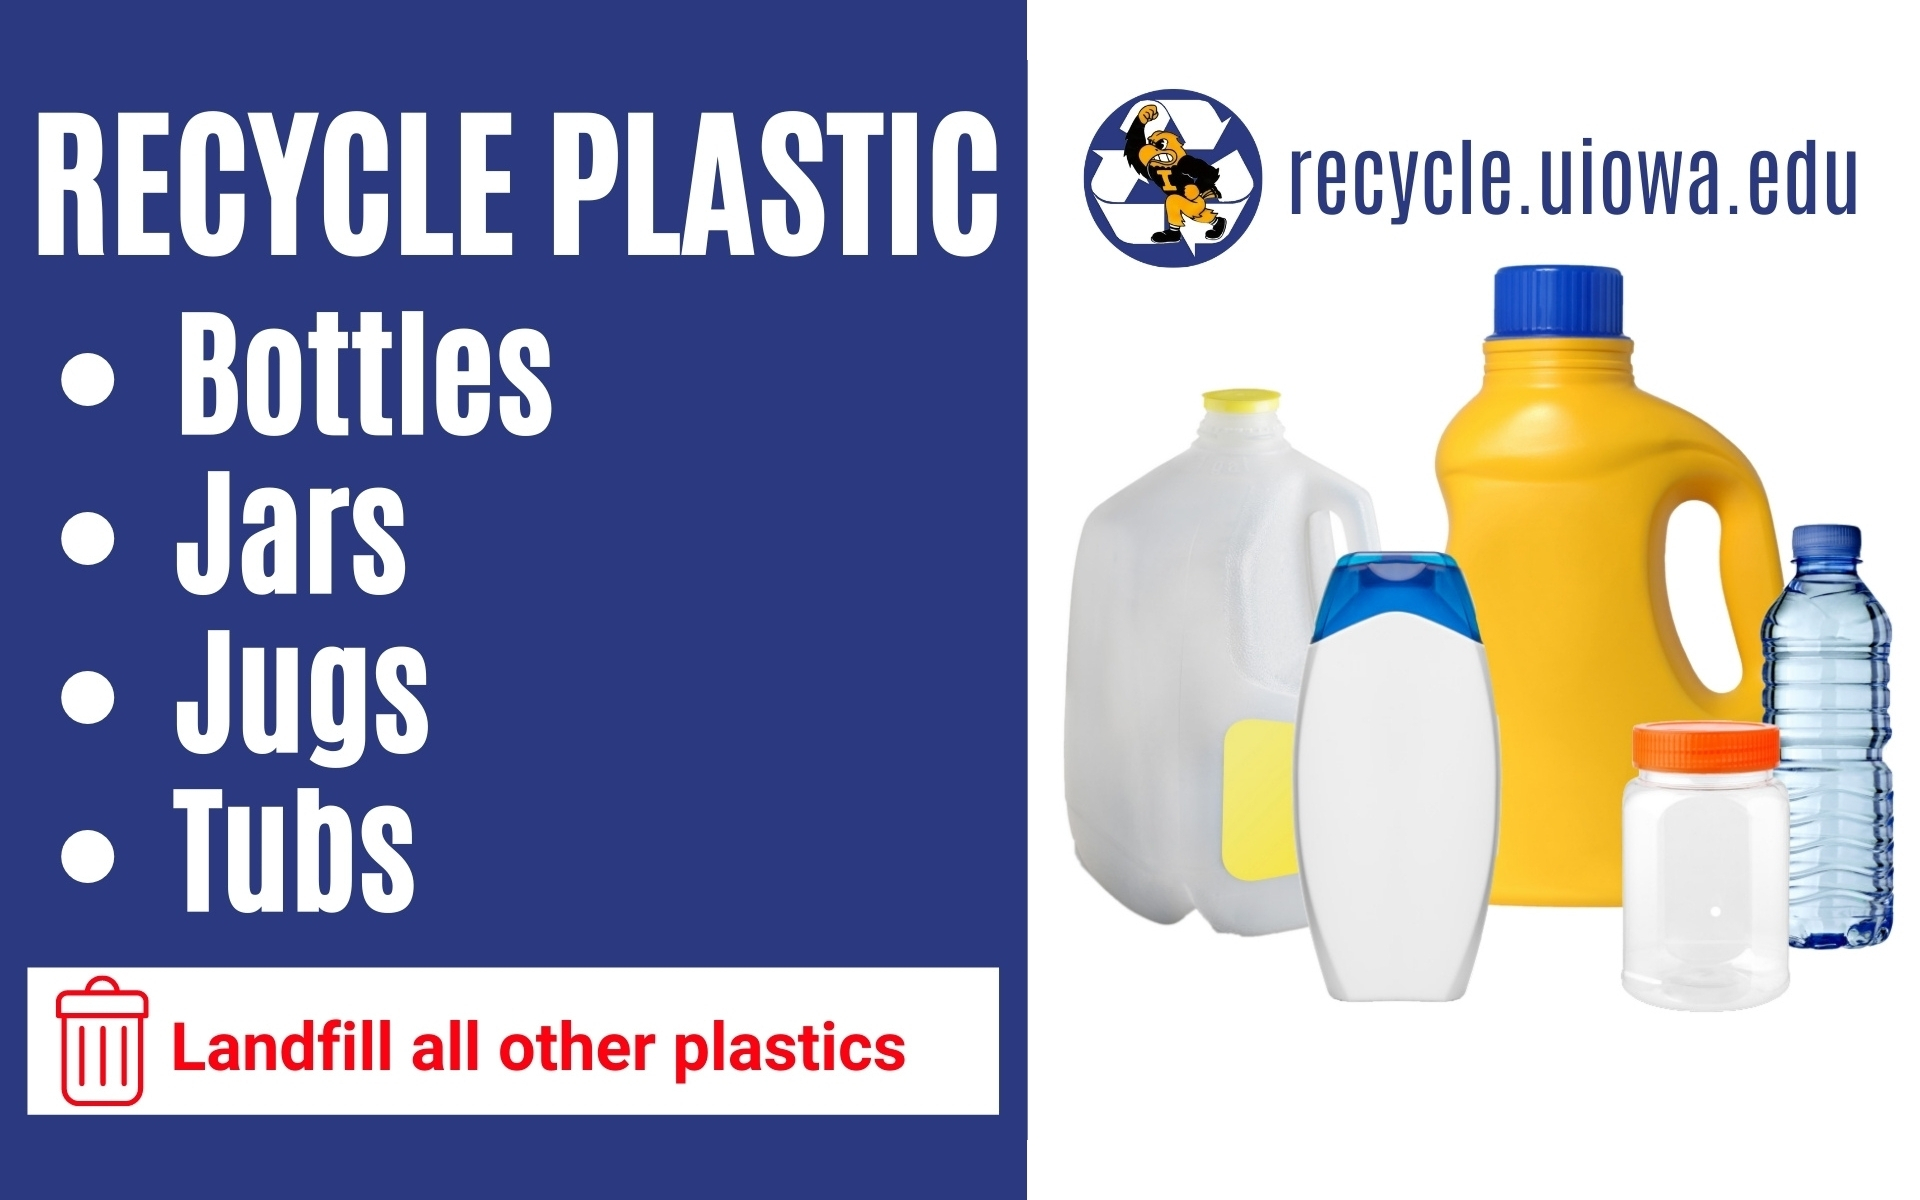 Recycle Plastic Bottles Jars Jugs and Tubs